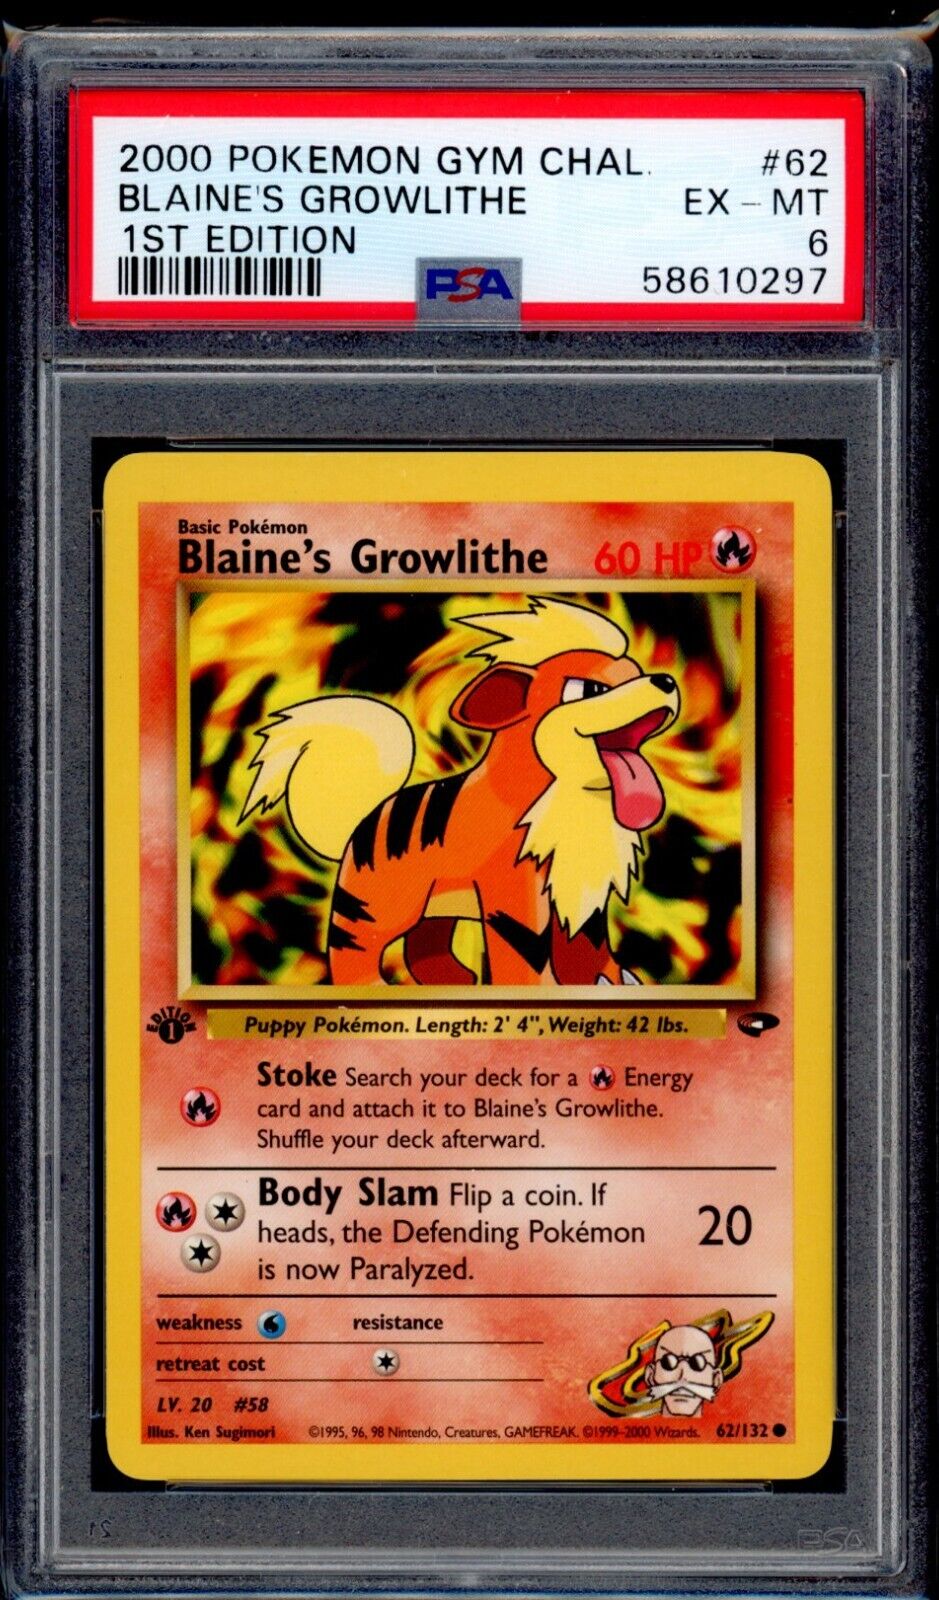 PSA 6 Blaine's Growlithe 2000 Pokemon Card 62/132 1st Edition Gym Challenge